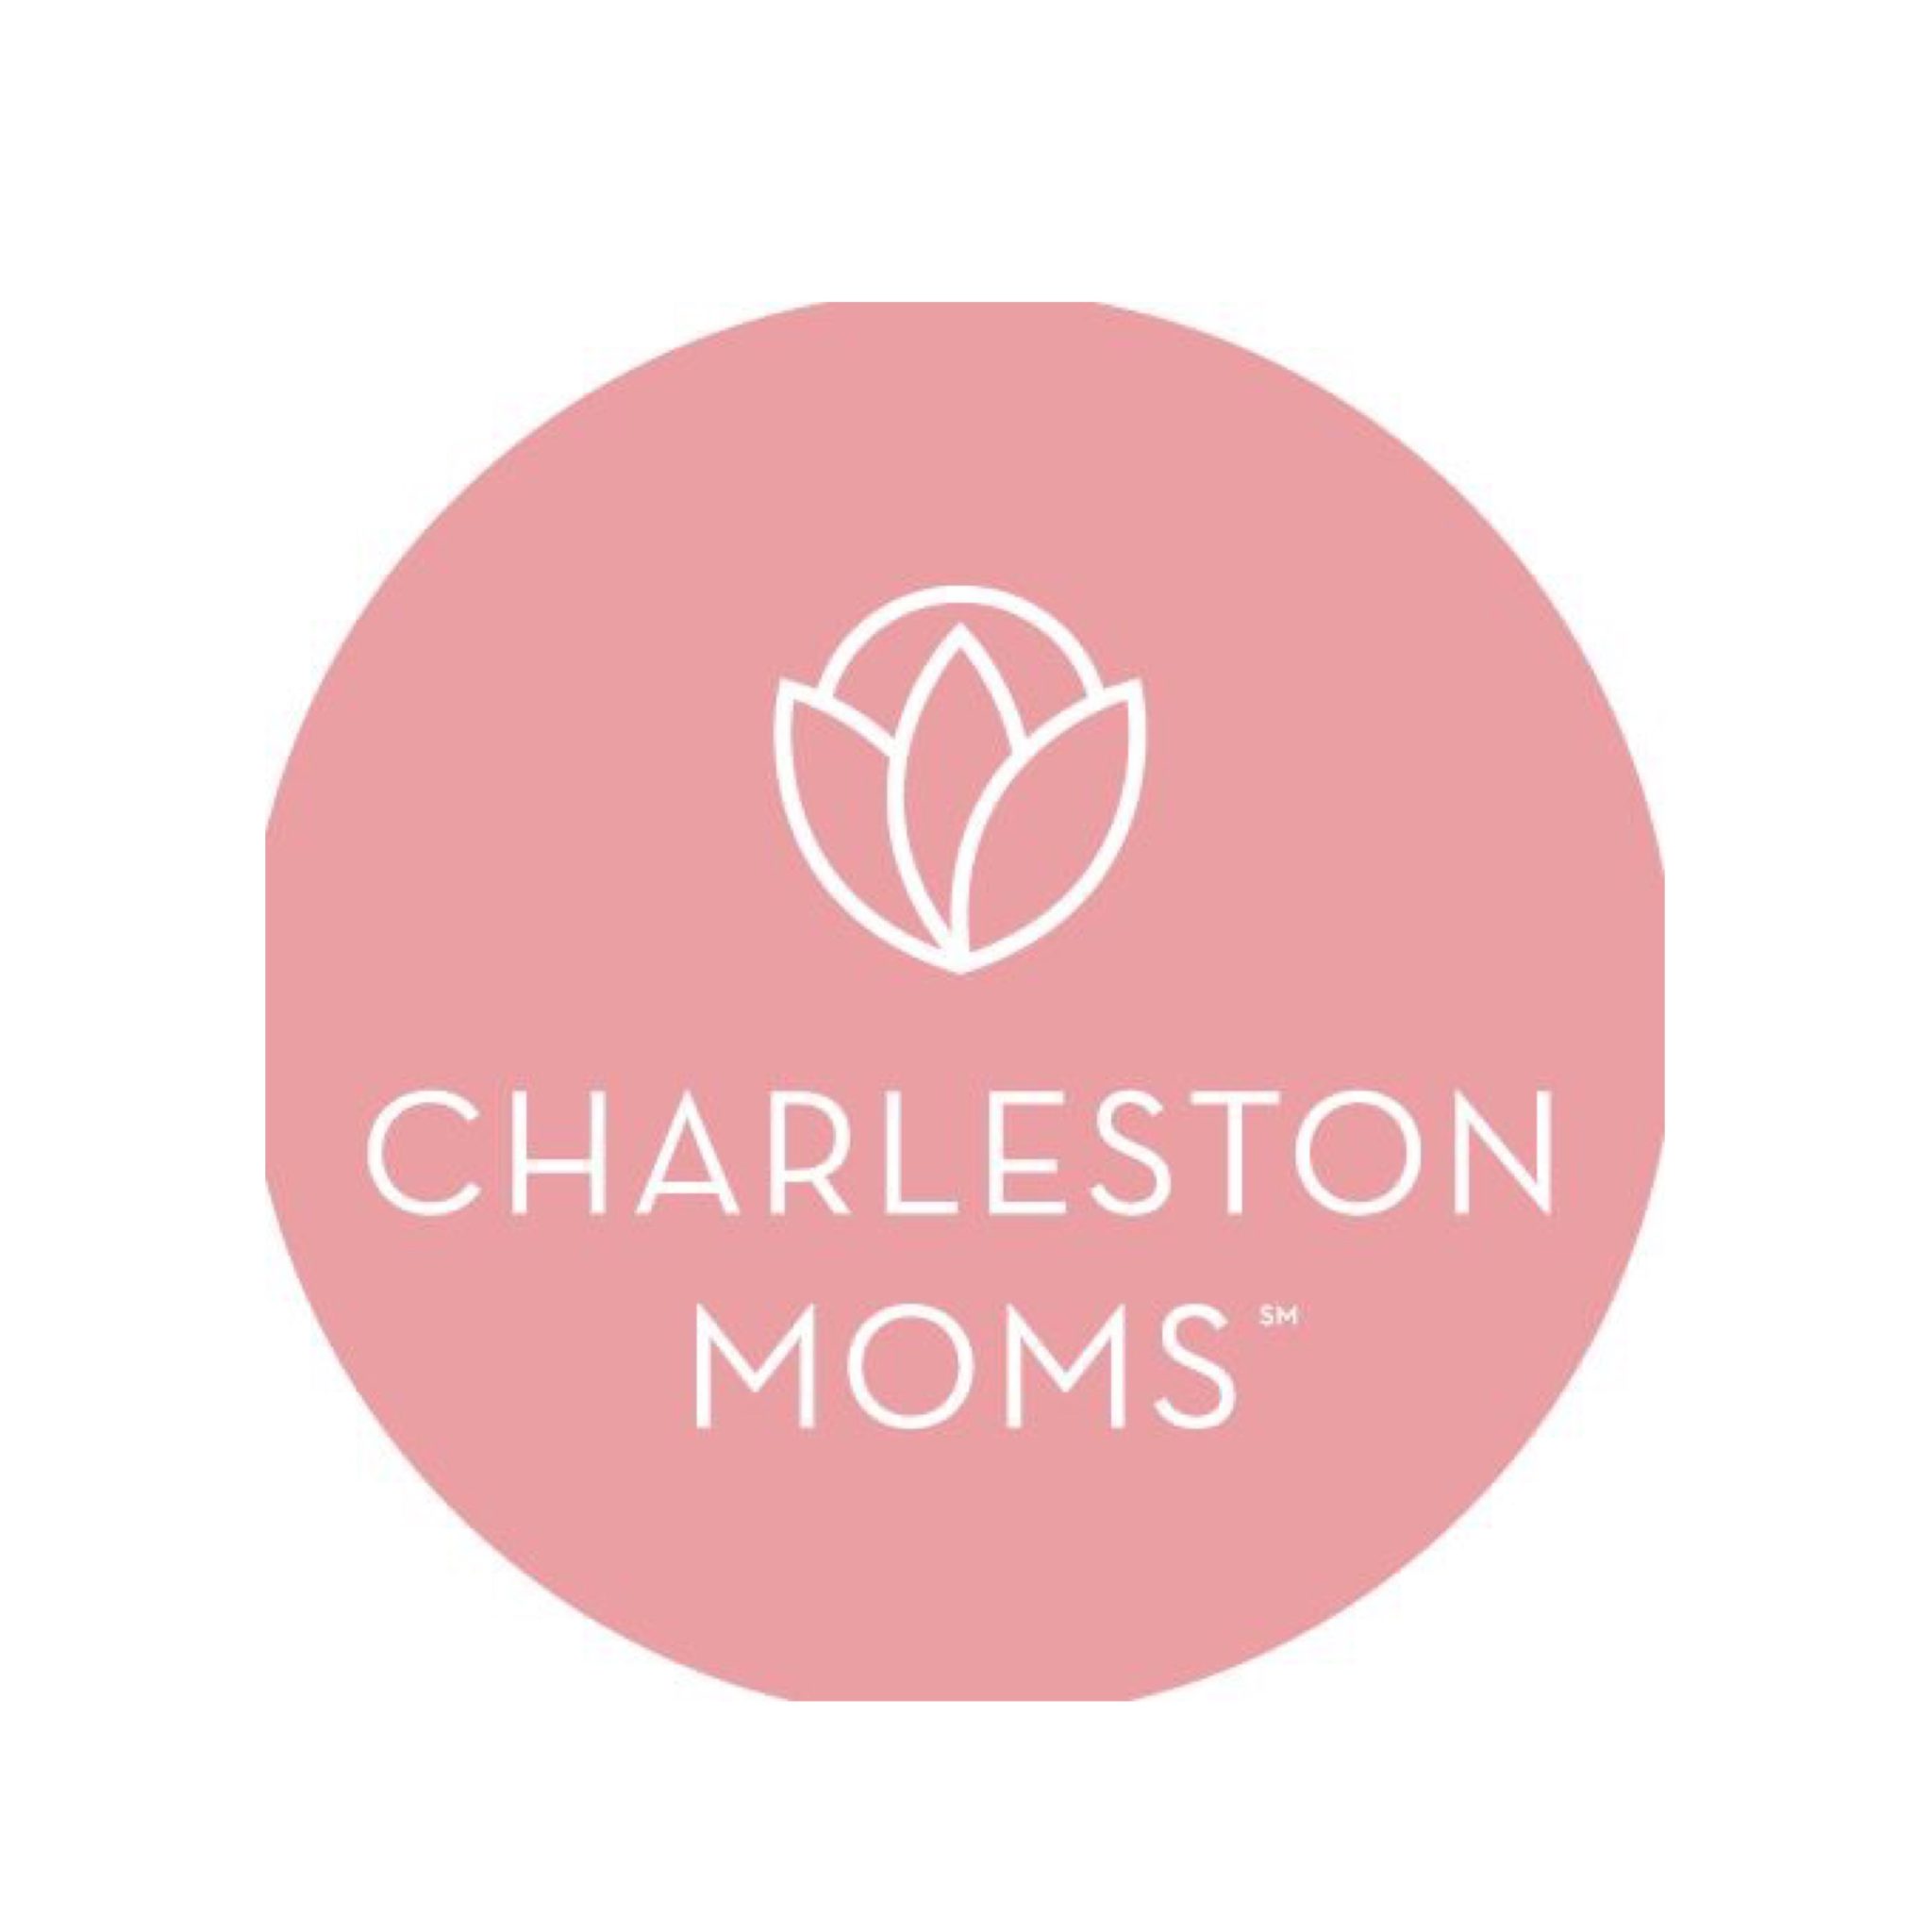 CHARLESTON MOMS